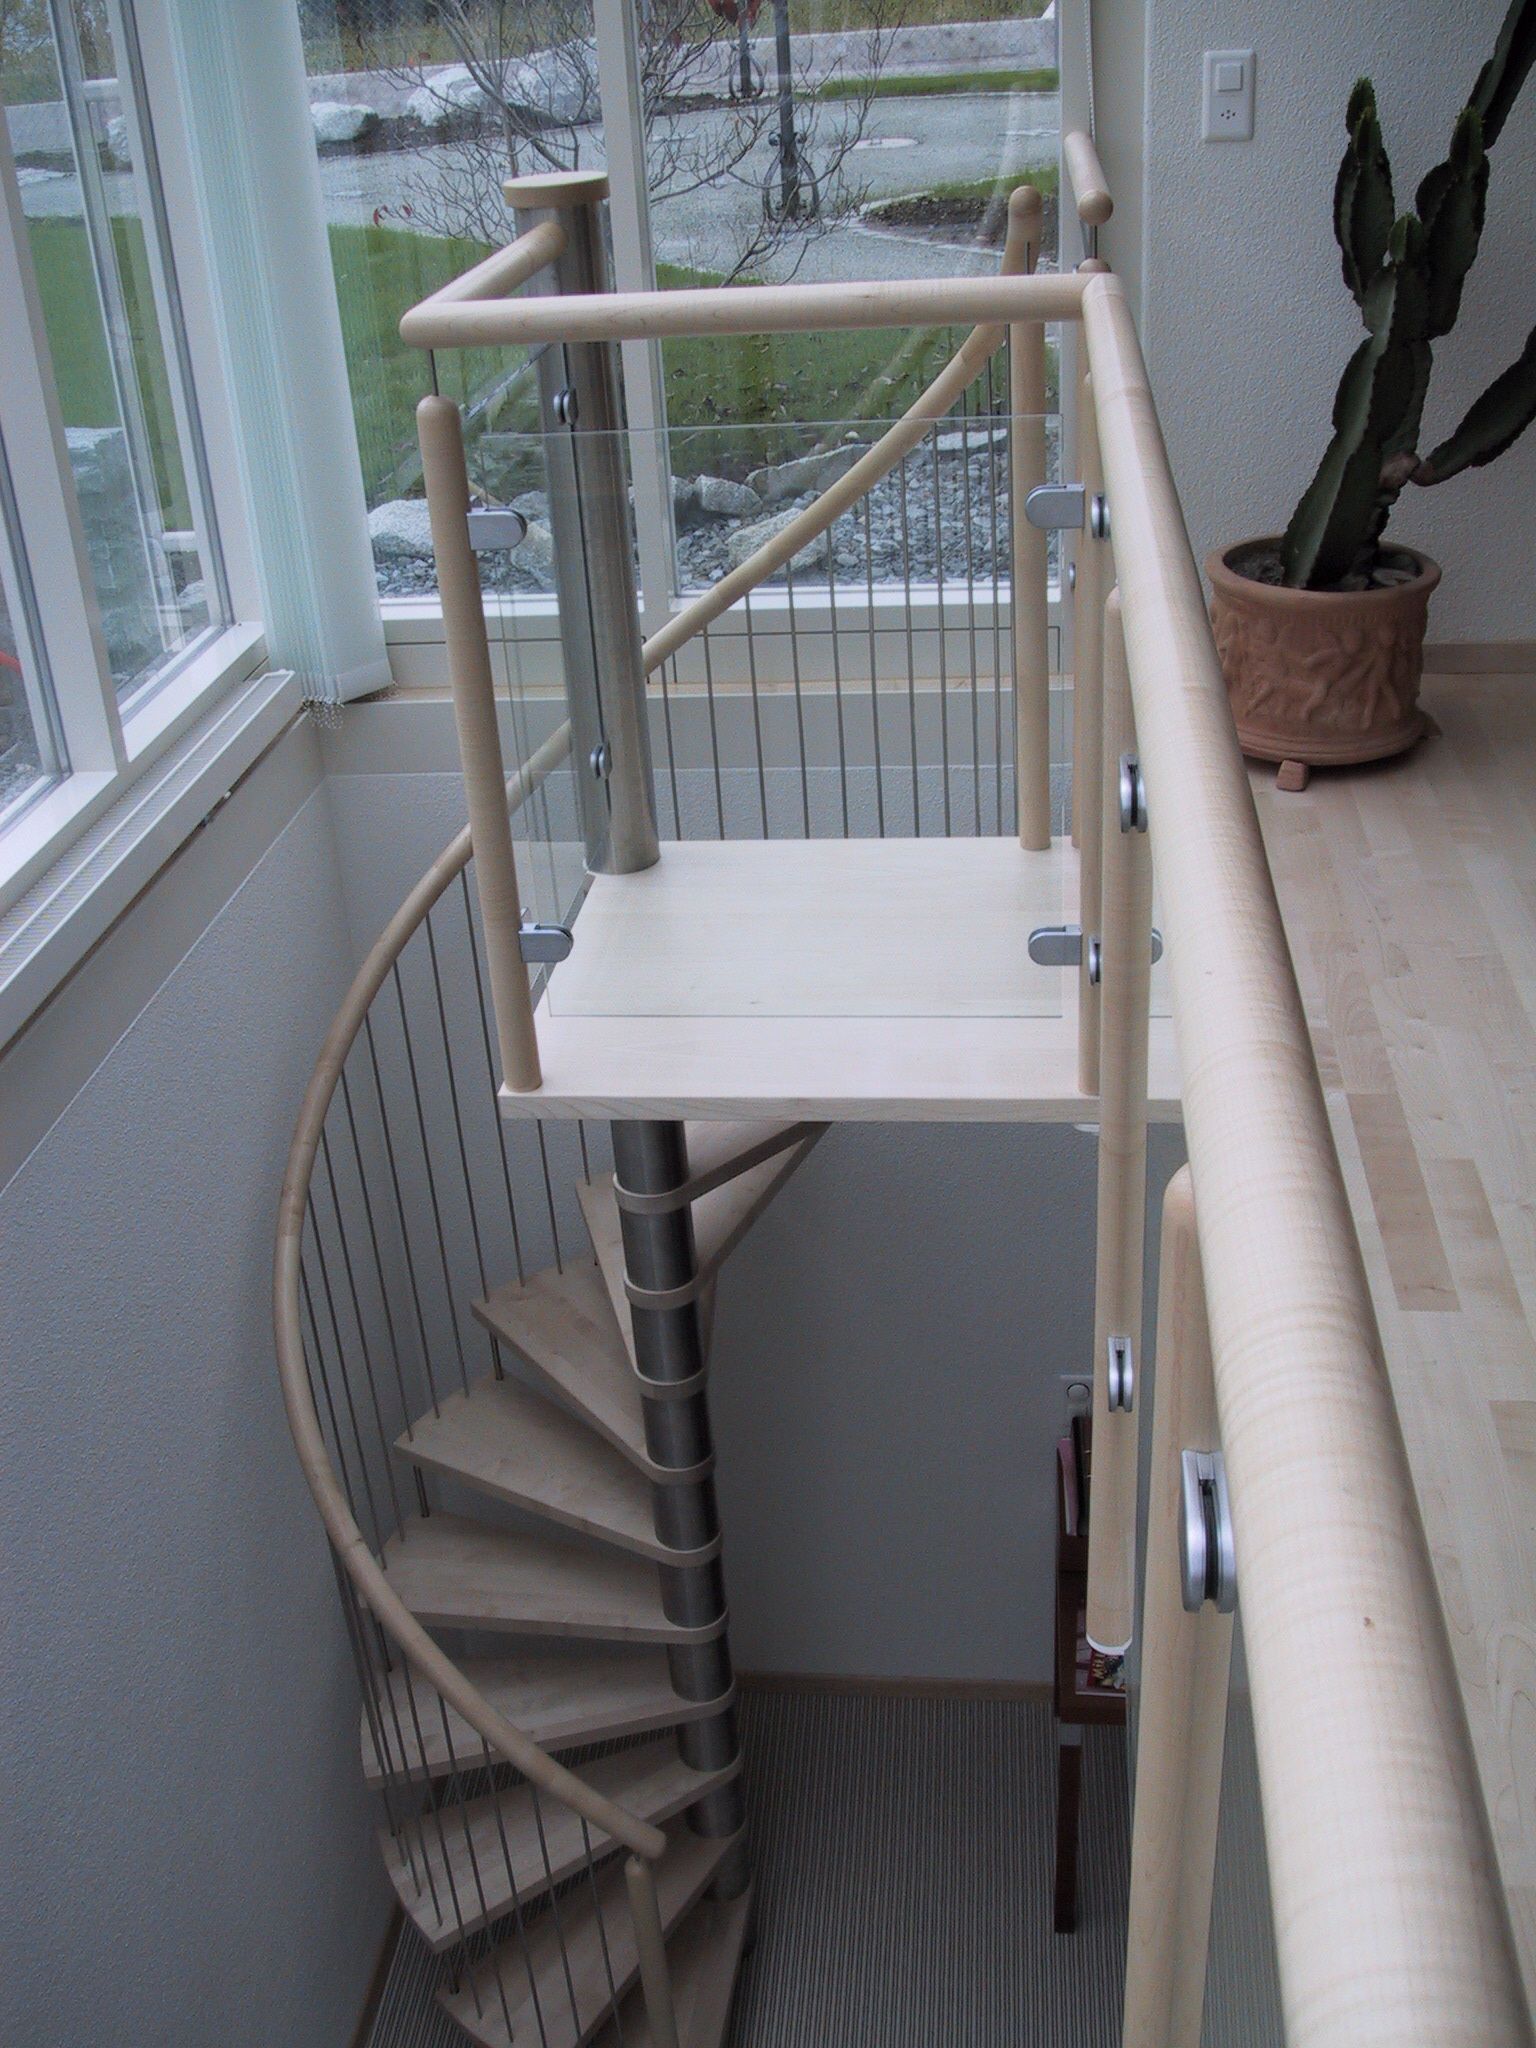 Stair Image 1